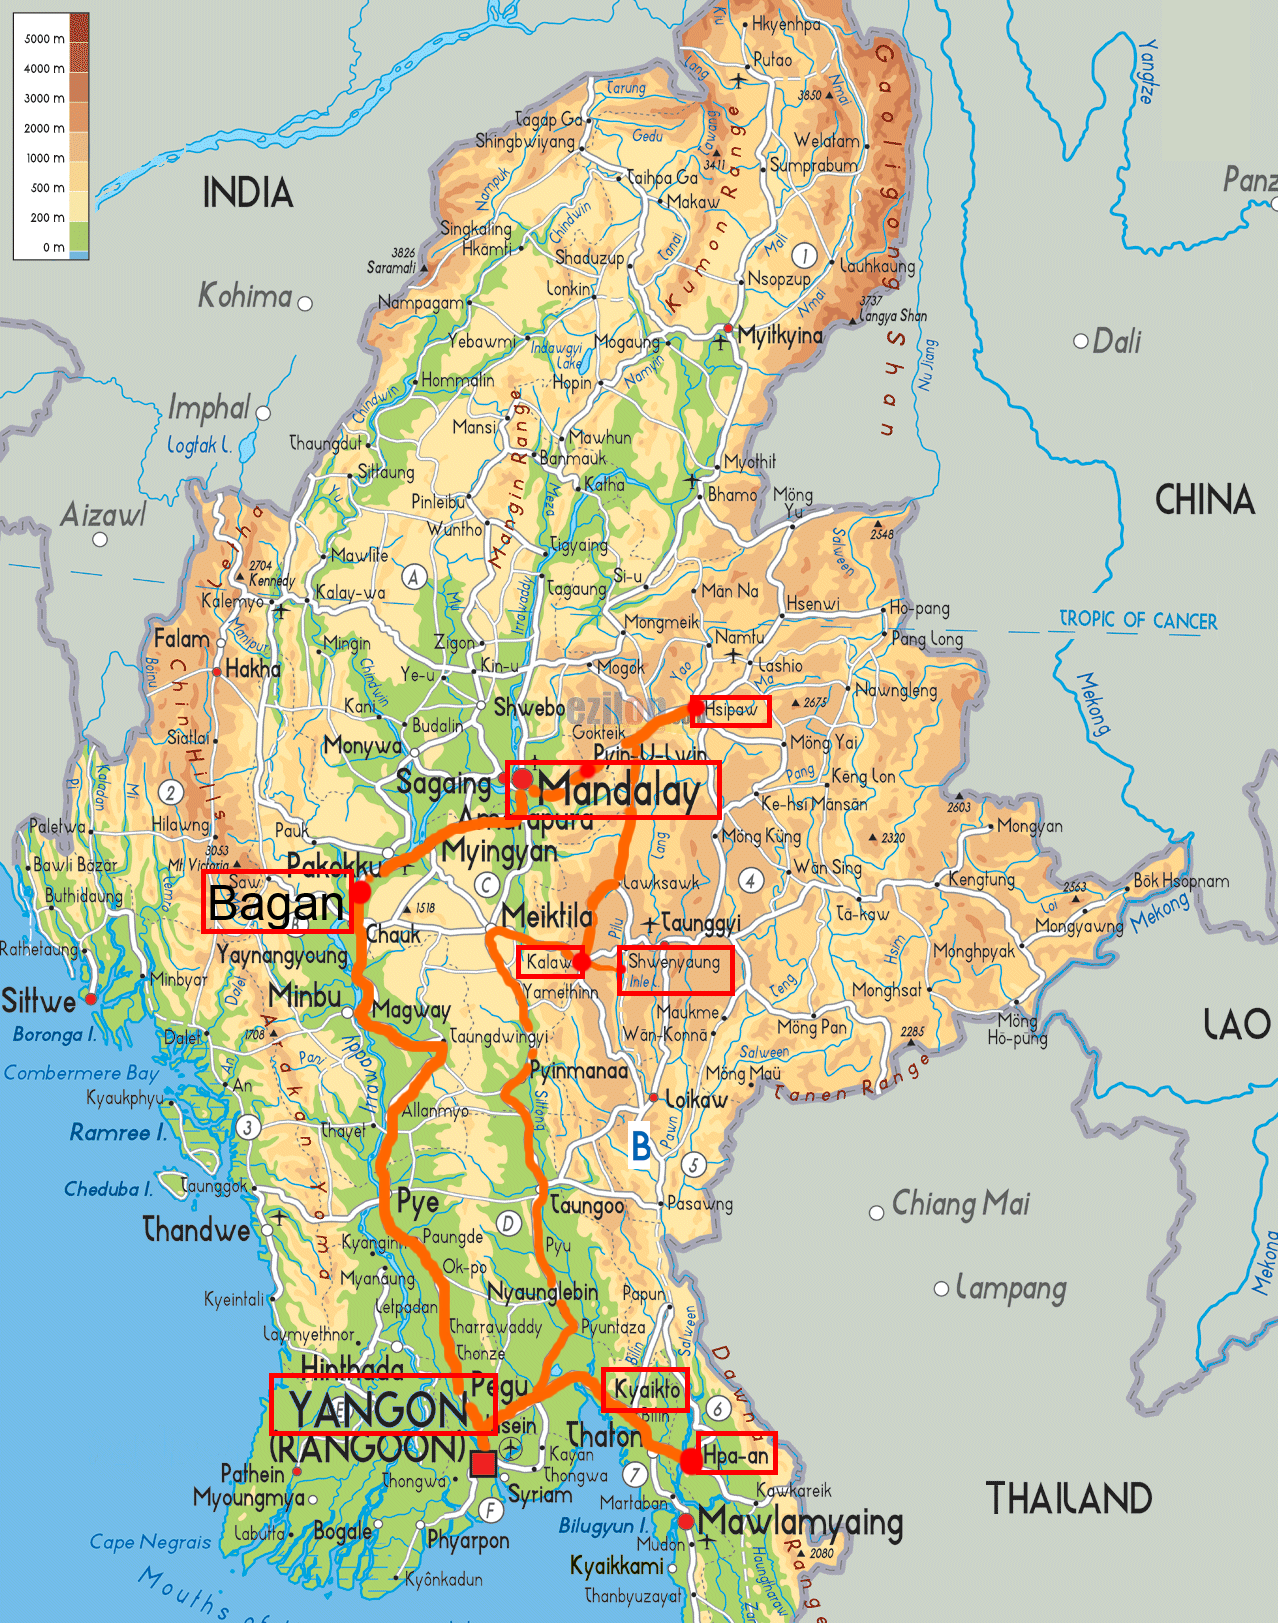 Notre trajet au Myanmar